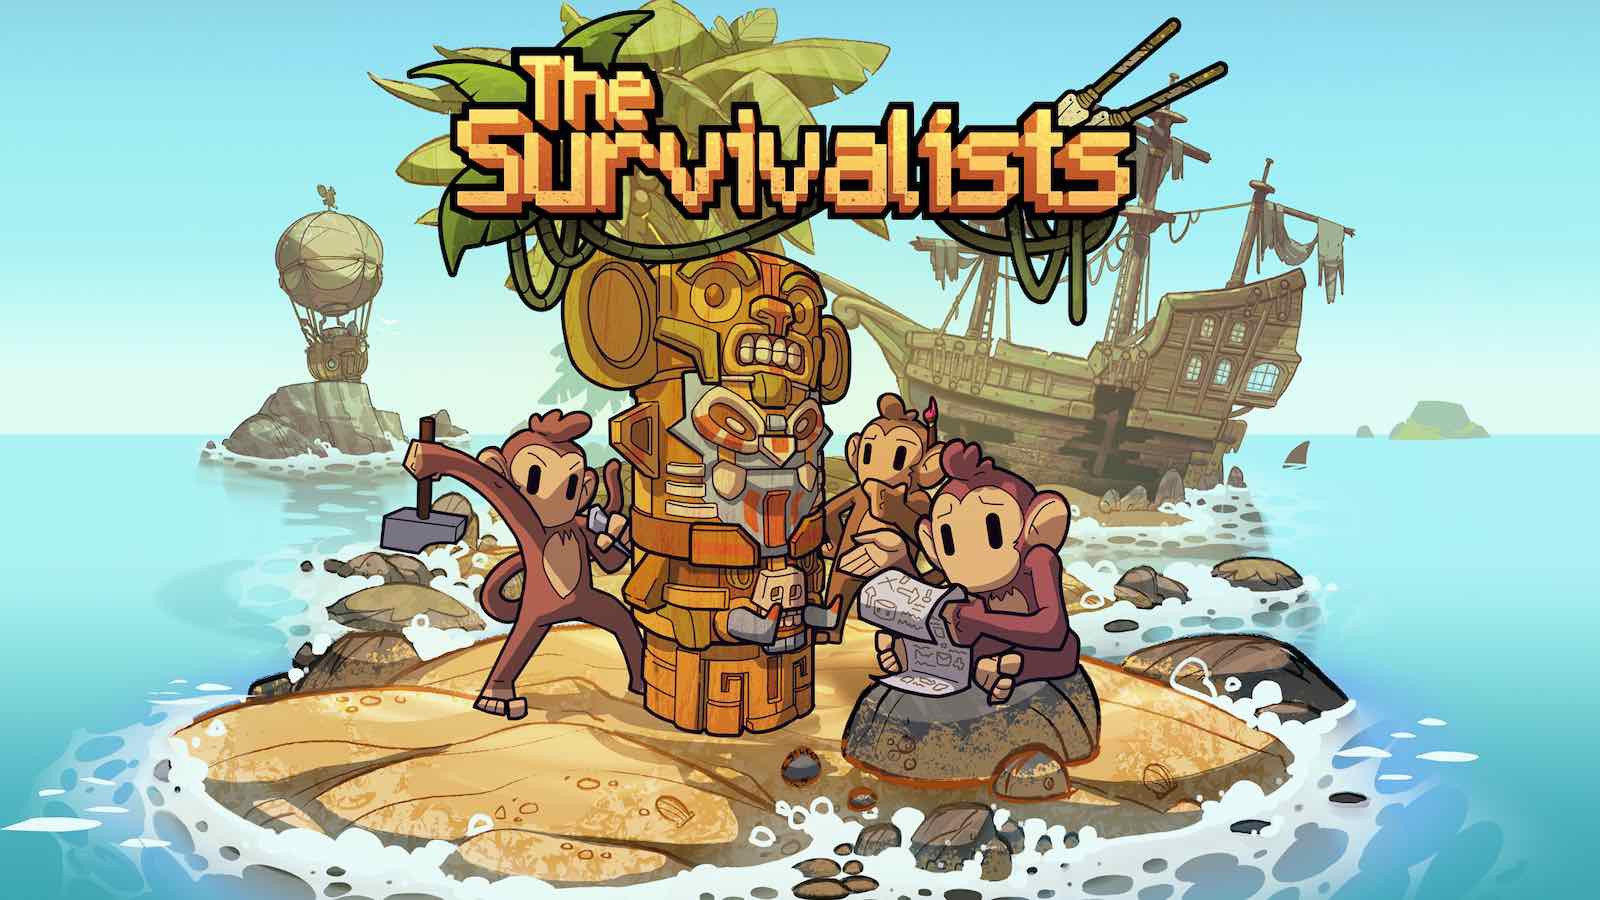 The Survivalists Header